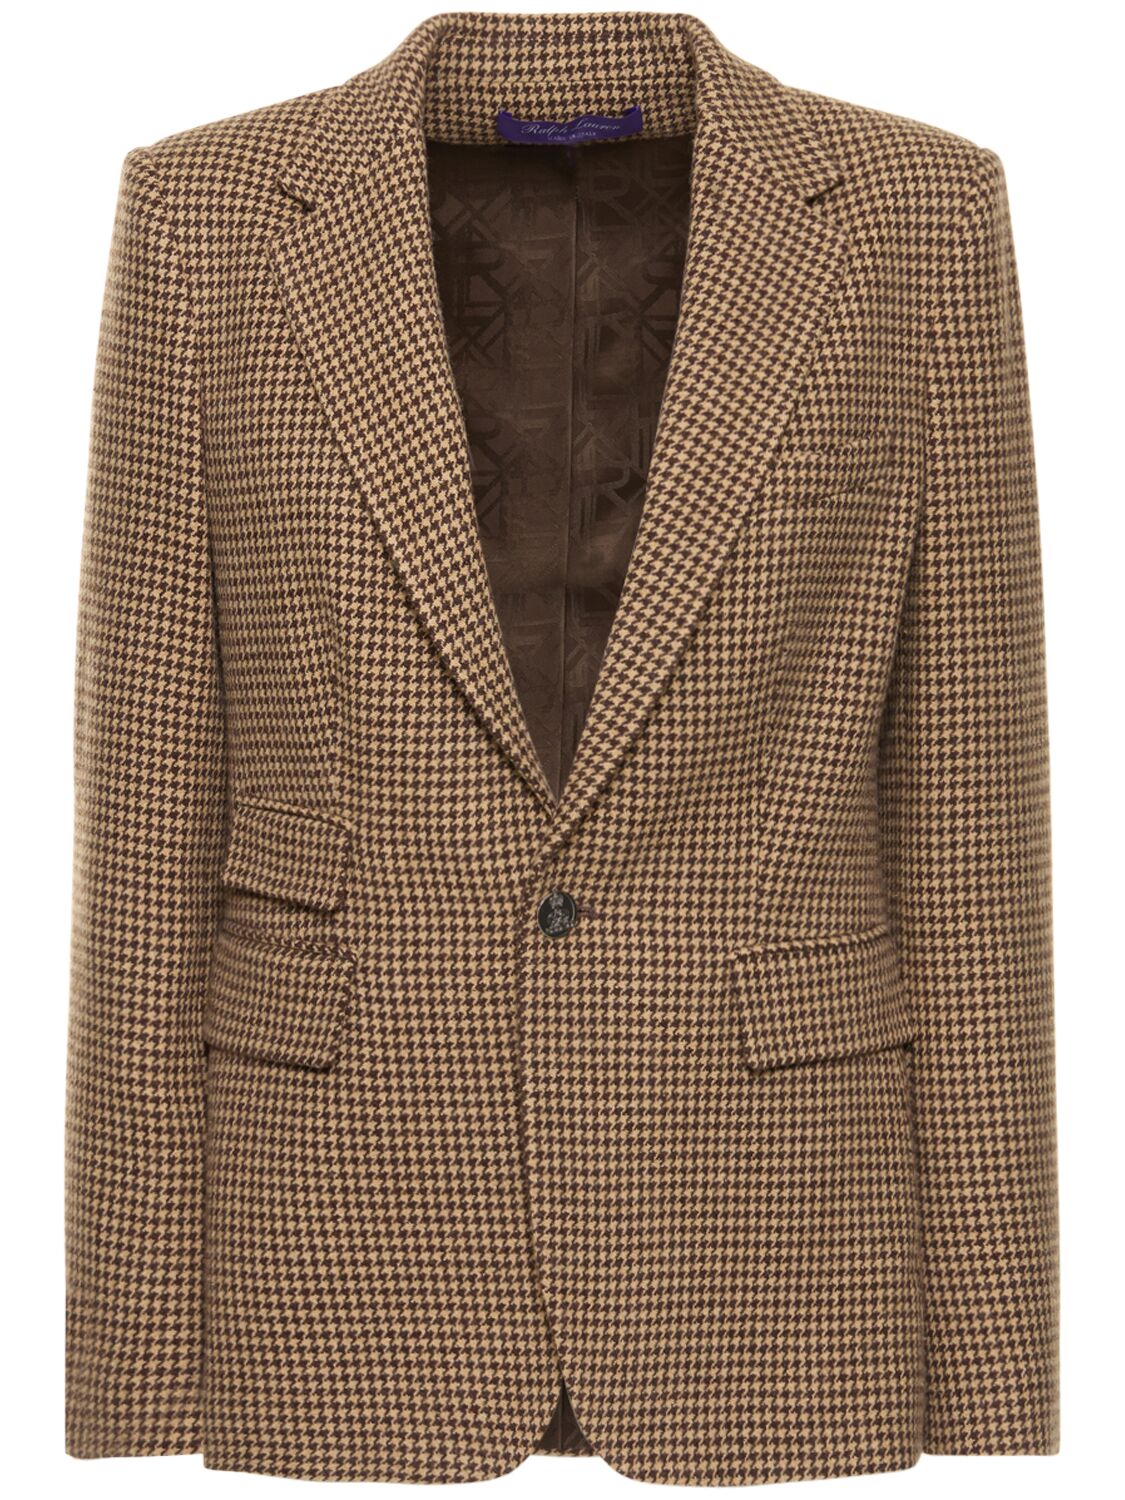 Tweed Houndstooth Jacket